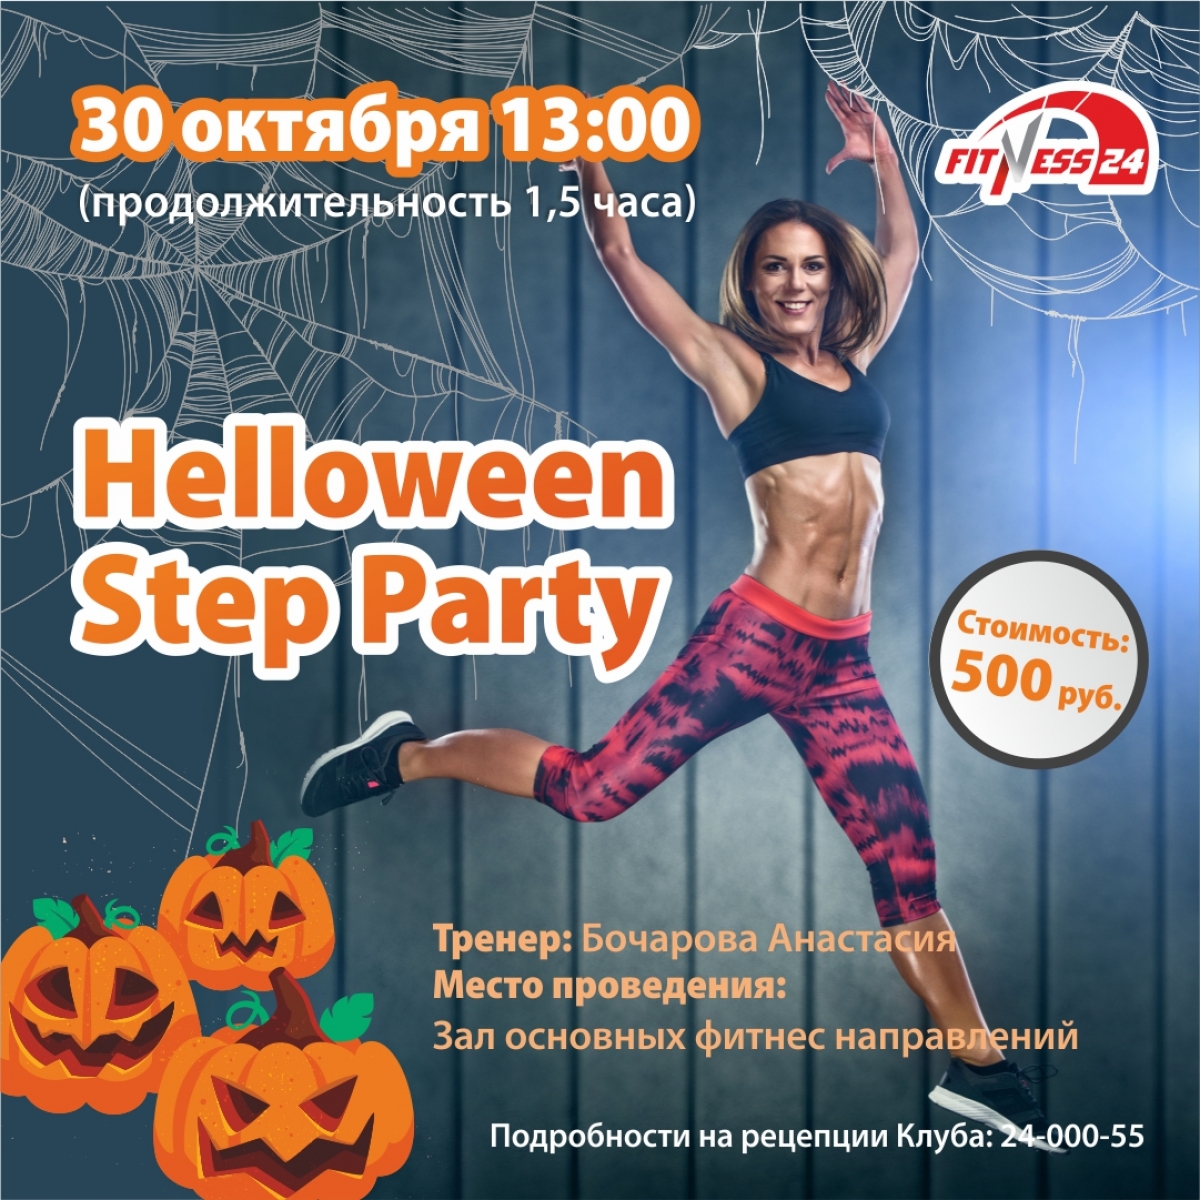 Helloween Step Party в Fitness24 Ветеранов